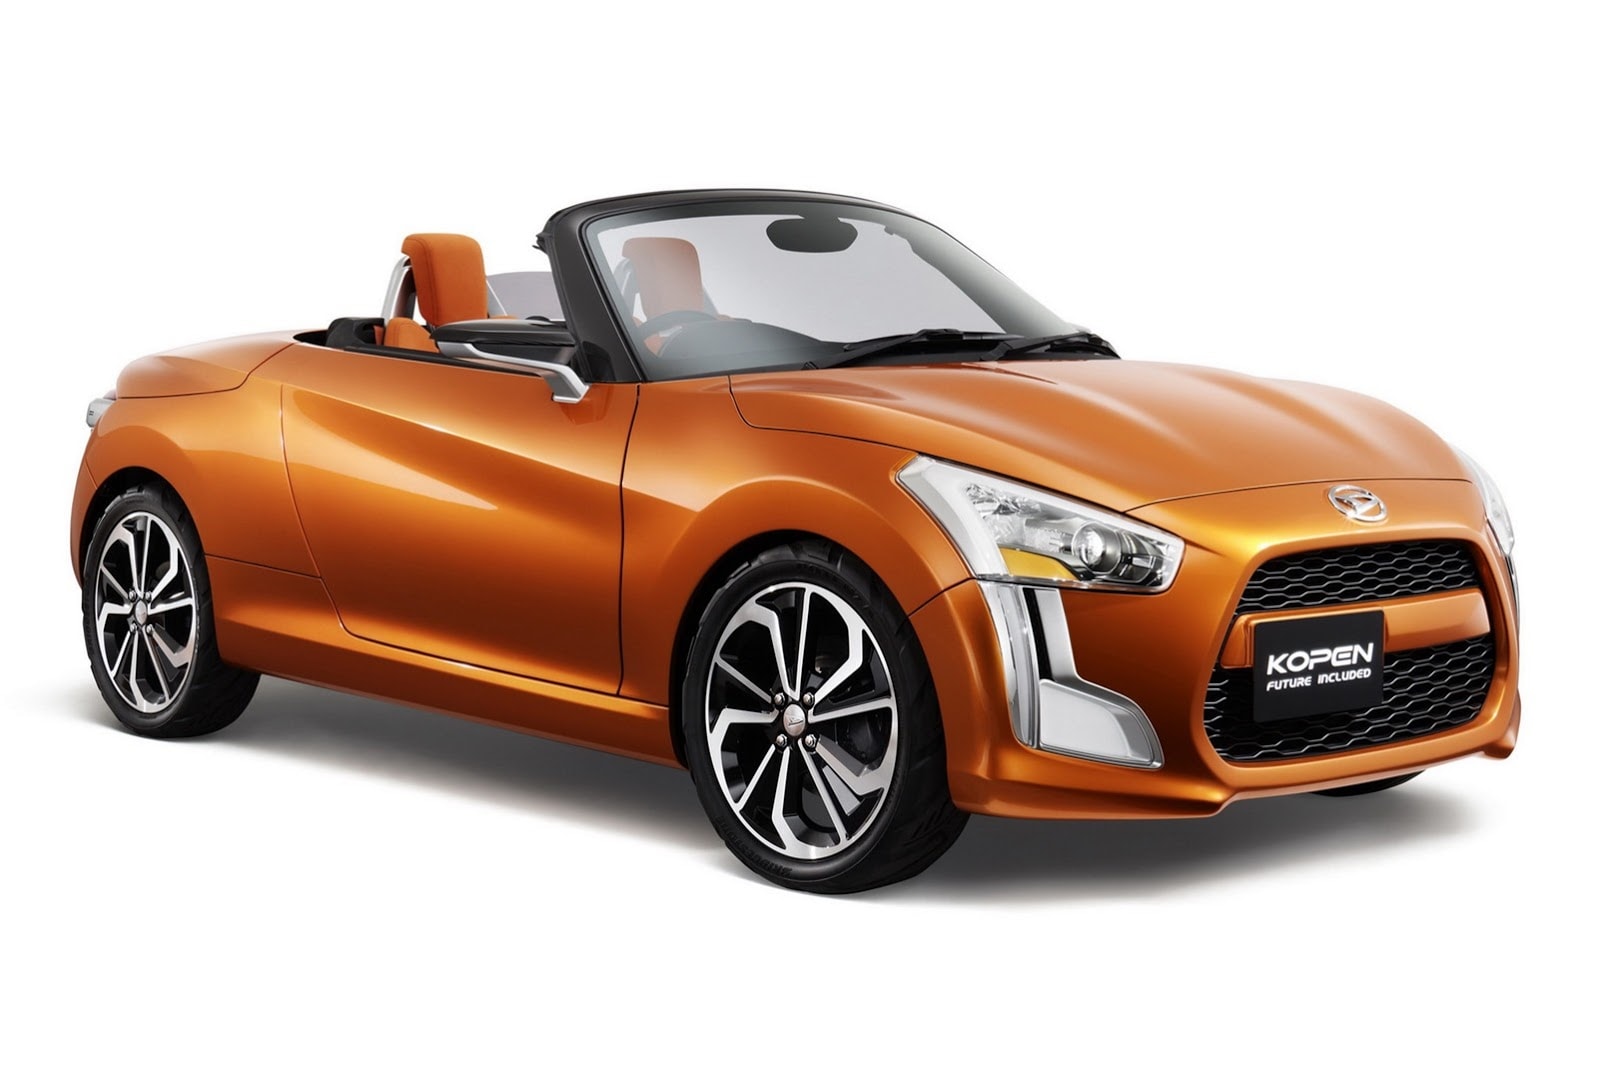 Daihatsu Kopen Concept Previews Generation Sports Kei Car - autoevolution